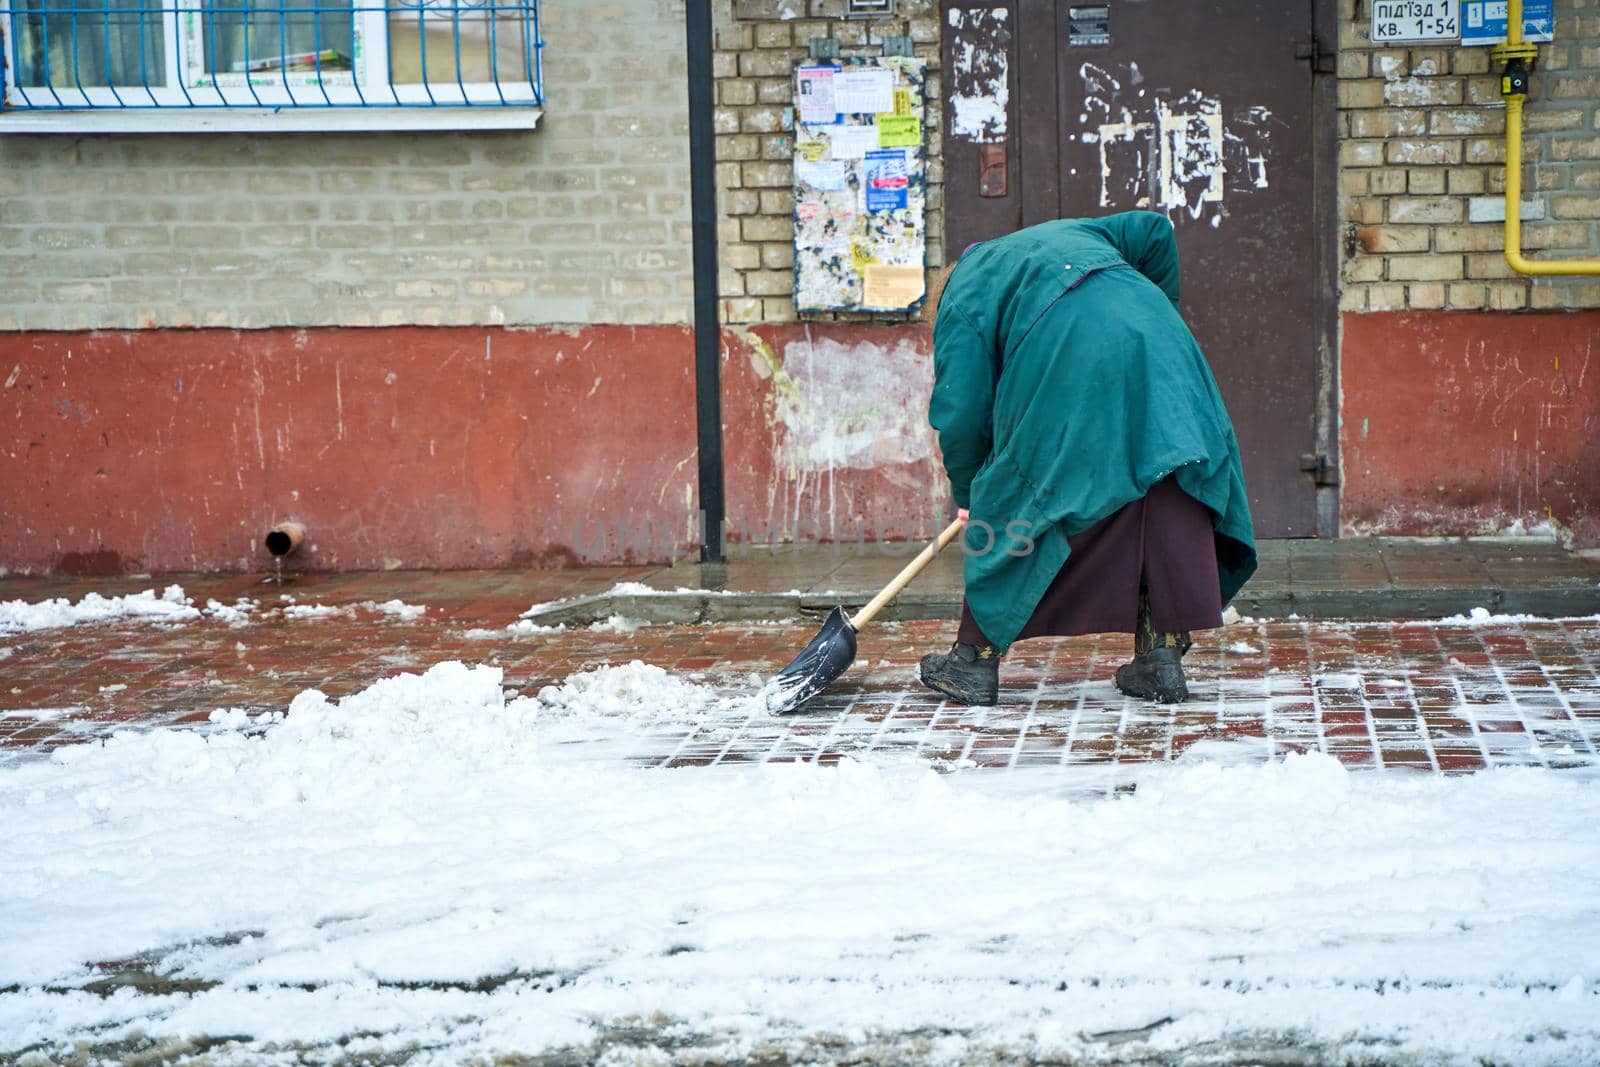 An old grandma yard man clears the snow on entrance.